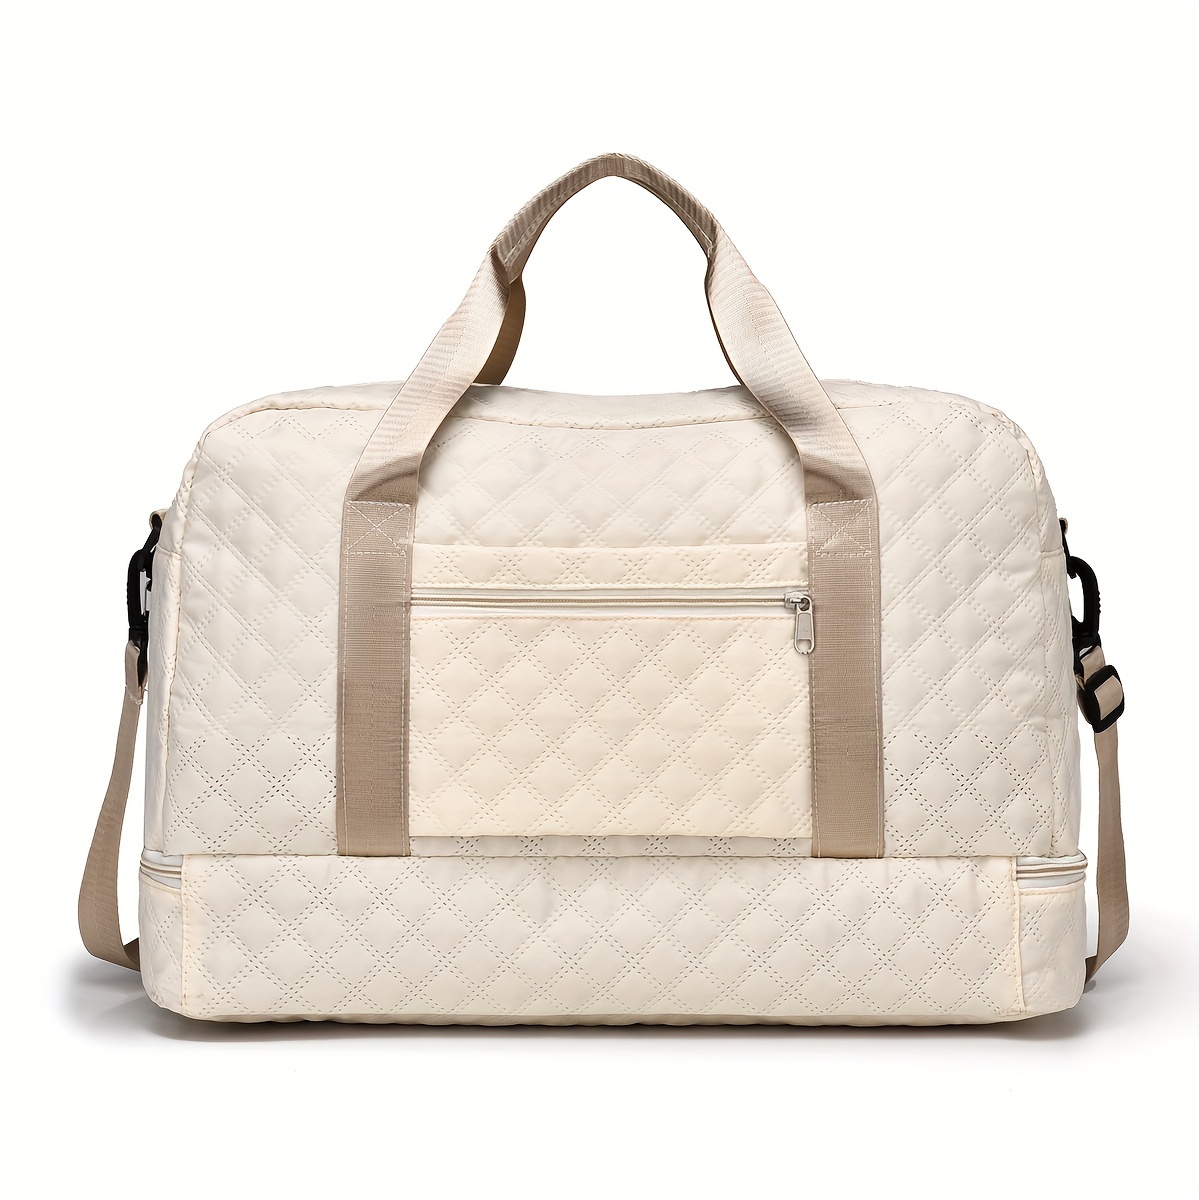 lightweight argyle pattern luggage bag large capacity travel duffle bag portable overnight bag details 26